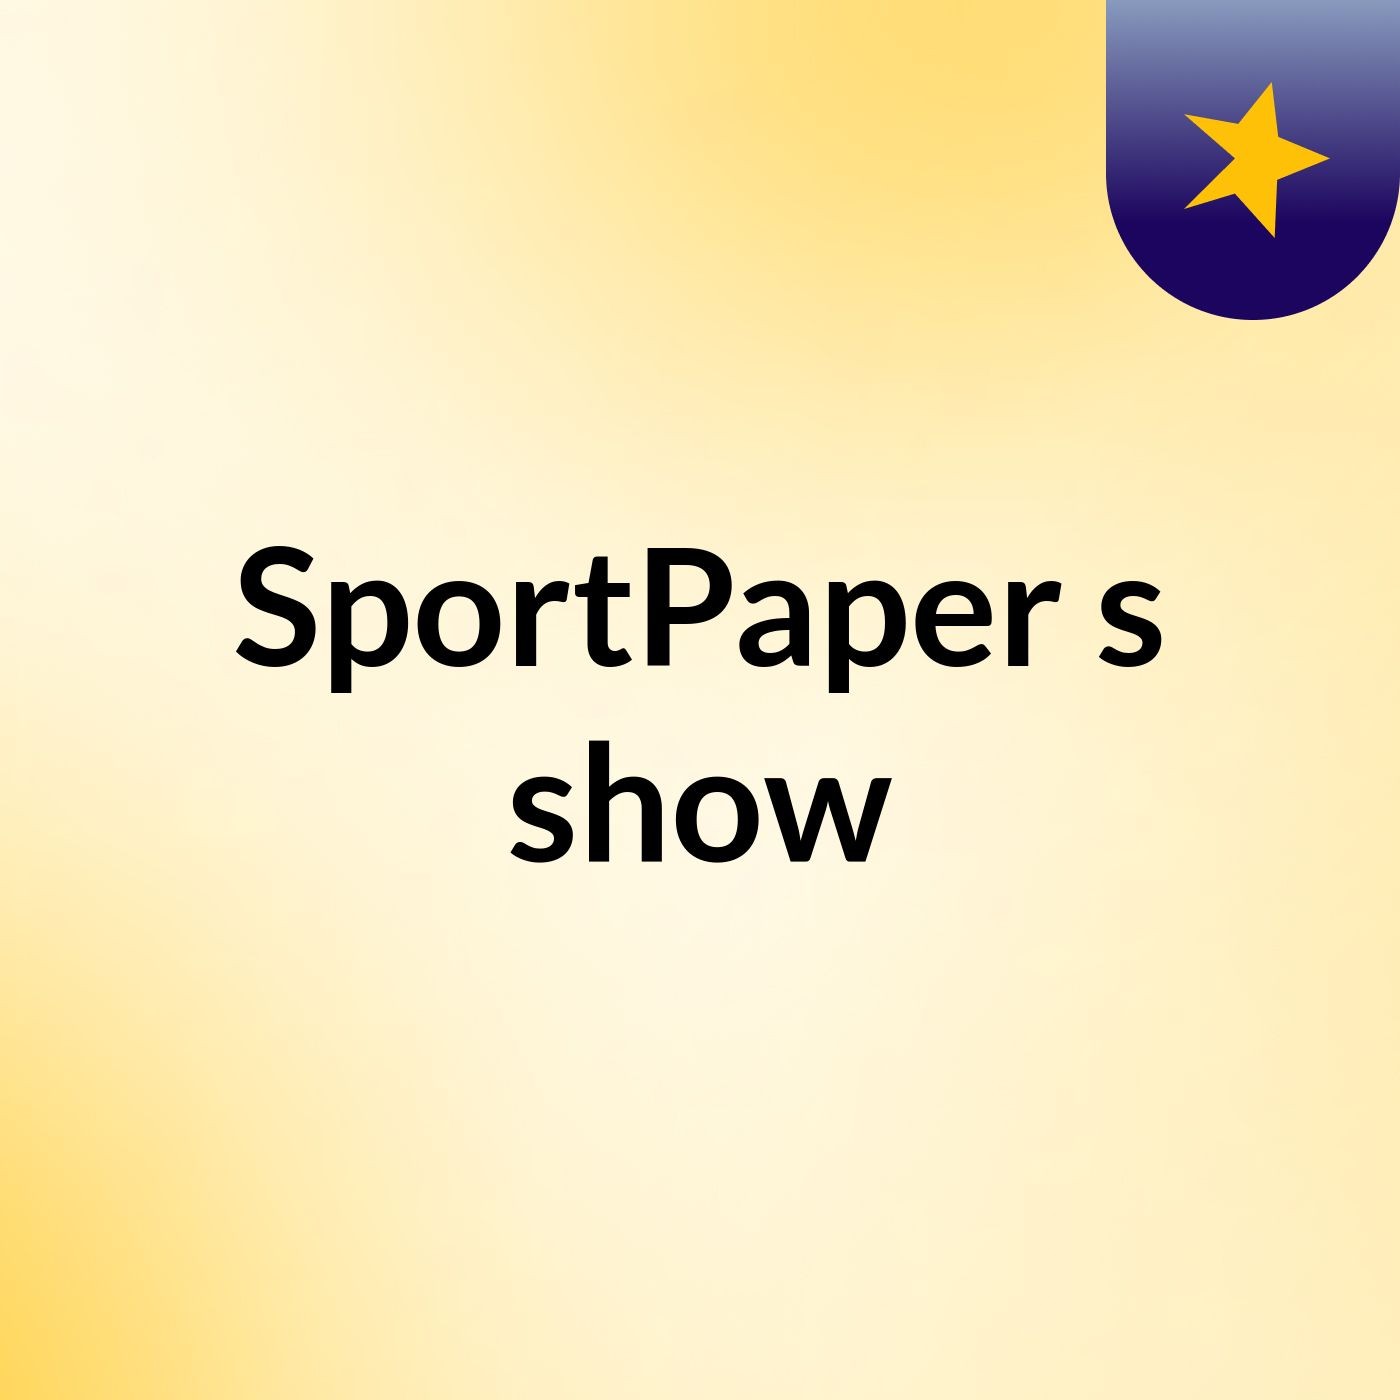 SportPaper's show